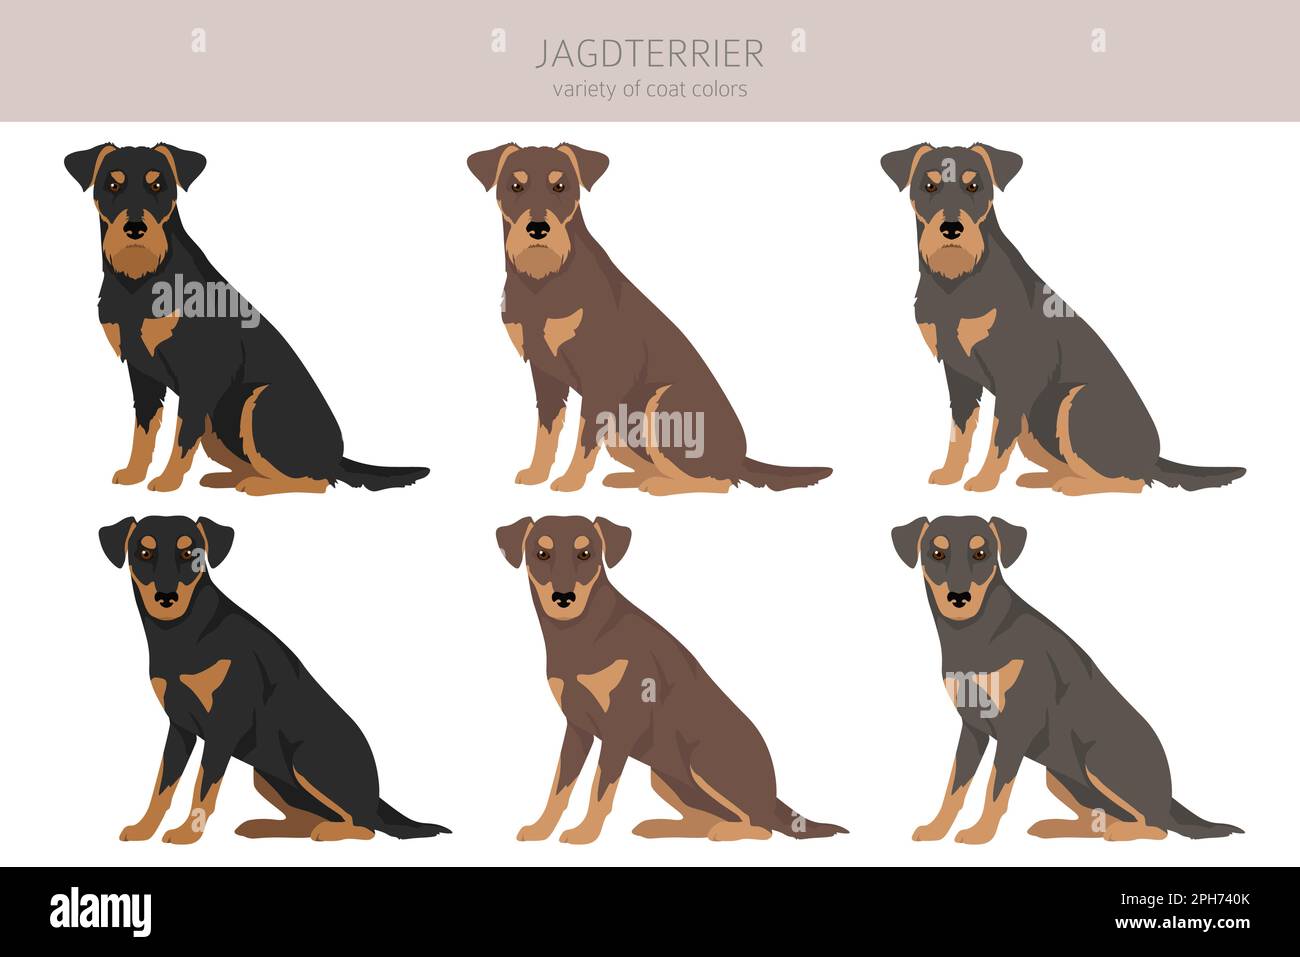 Jagdterrier clipart. Different poses, coat colors set.  Vector illustration Stock Vector